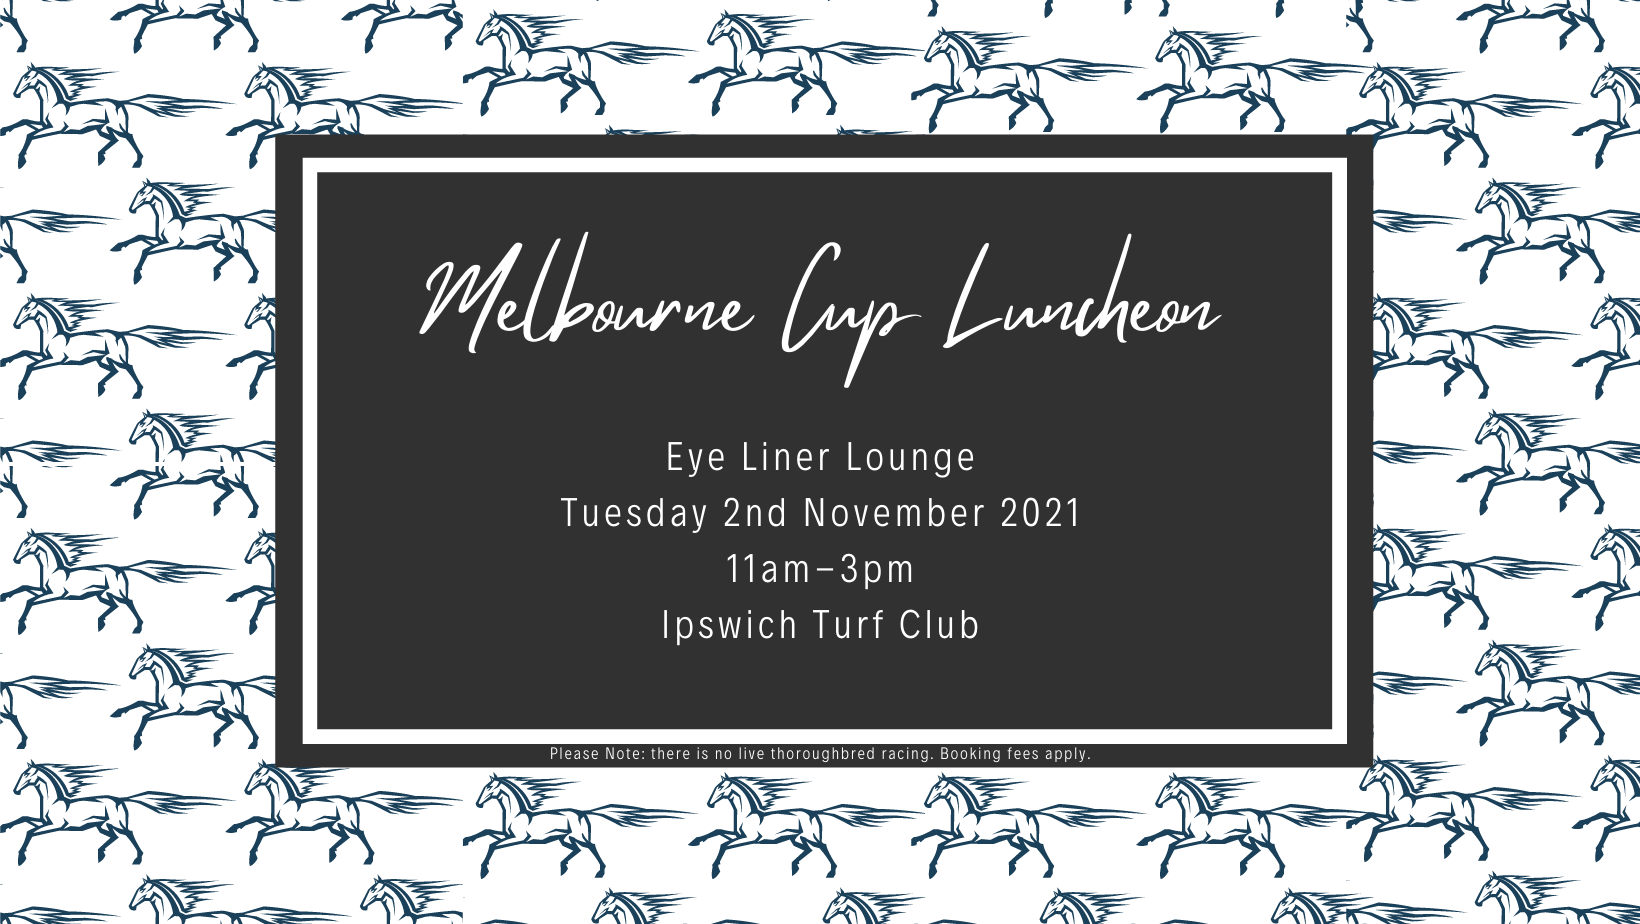 Eye Liner Lounge Melbourne Cup 